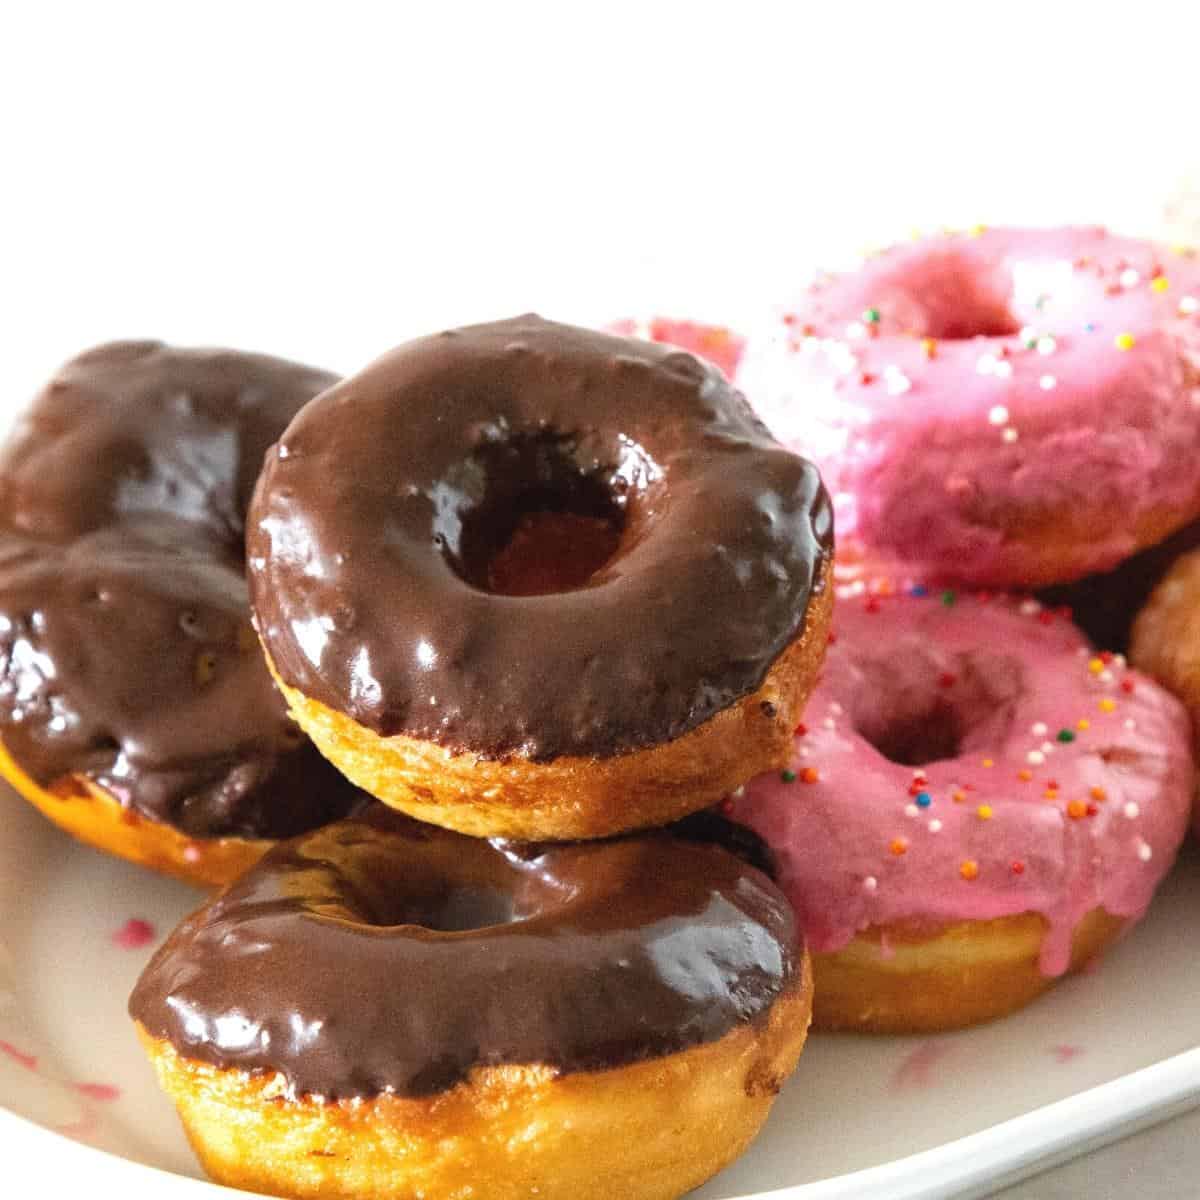 A tray with chocolate glazed donuts.